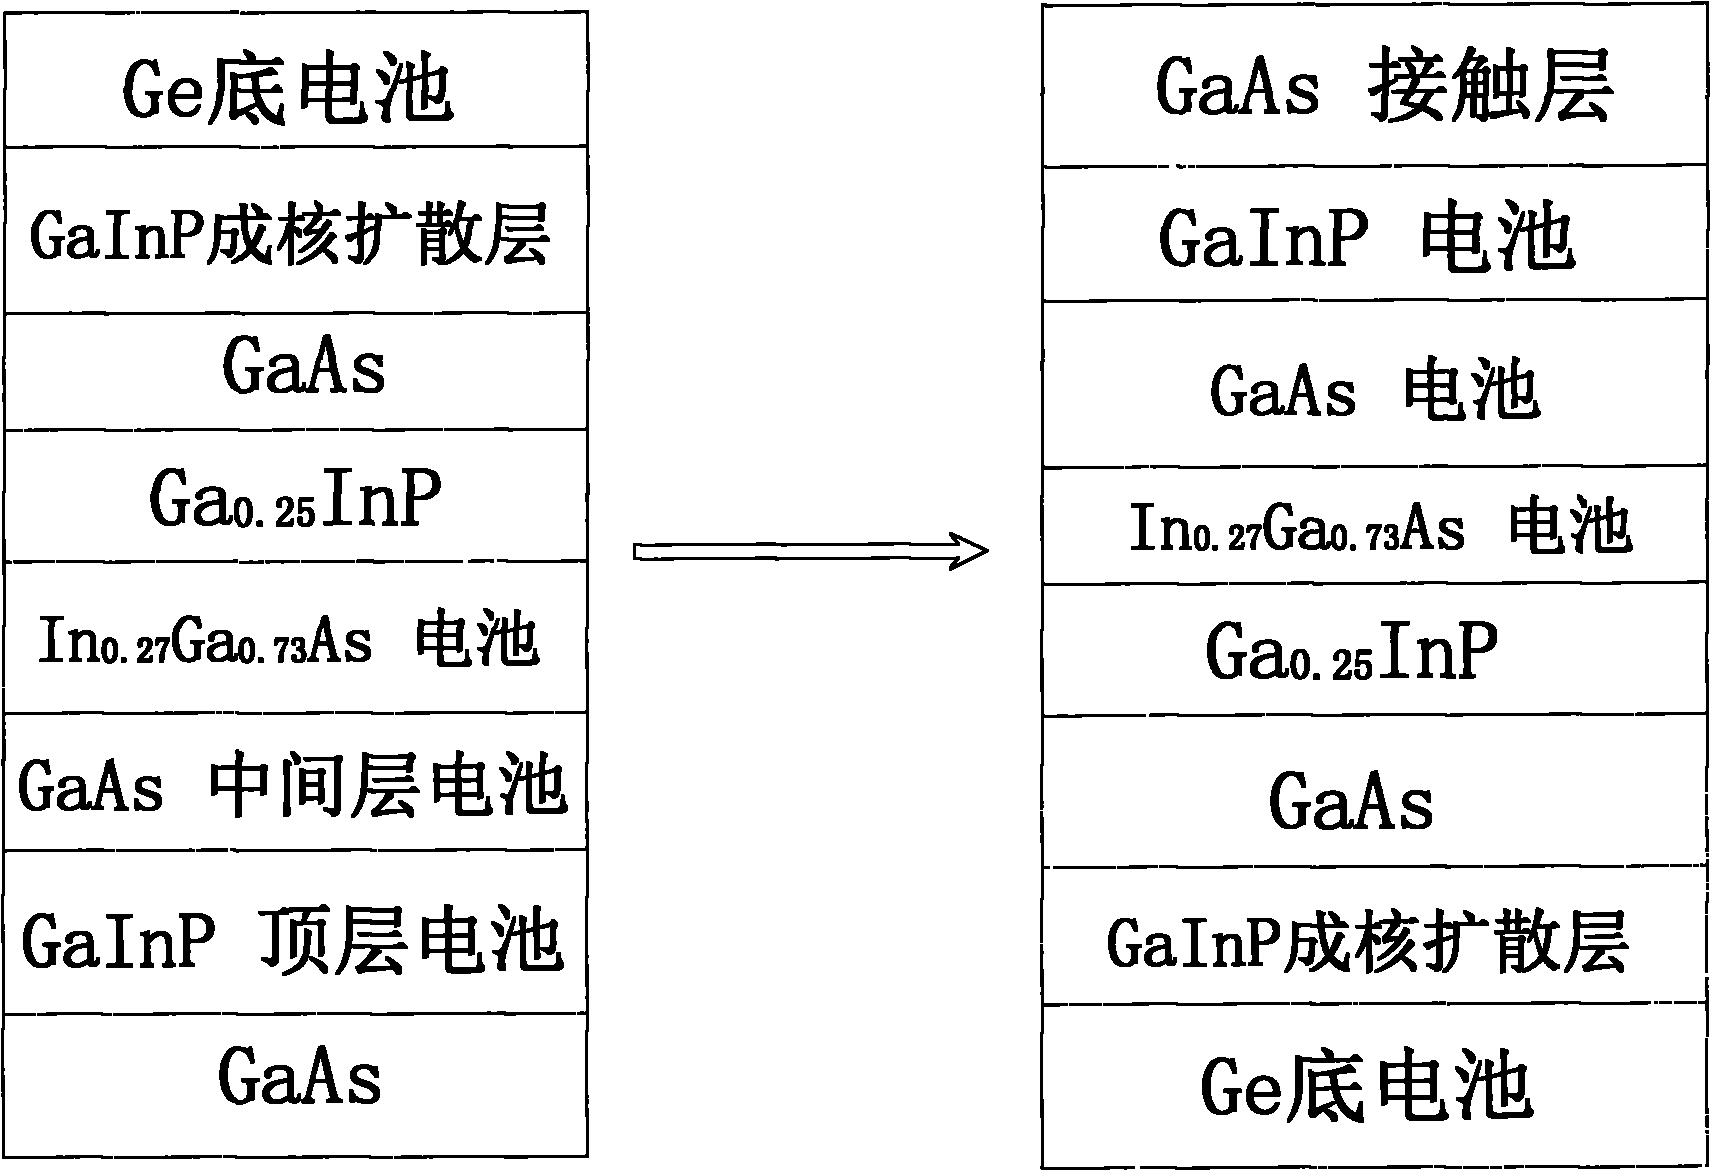 Method for manufacturing quadri-junction GaInP/GaAs/InGaAs/Ge solar cells